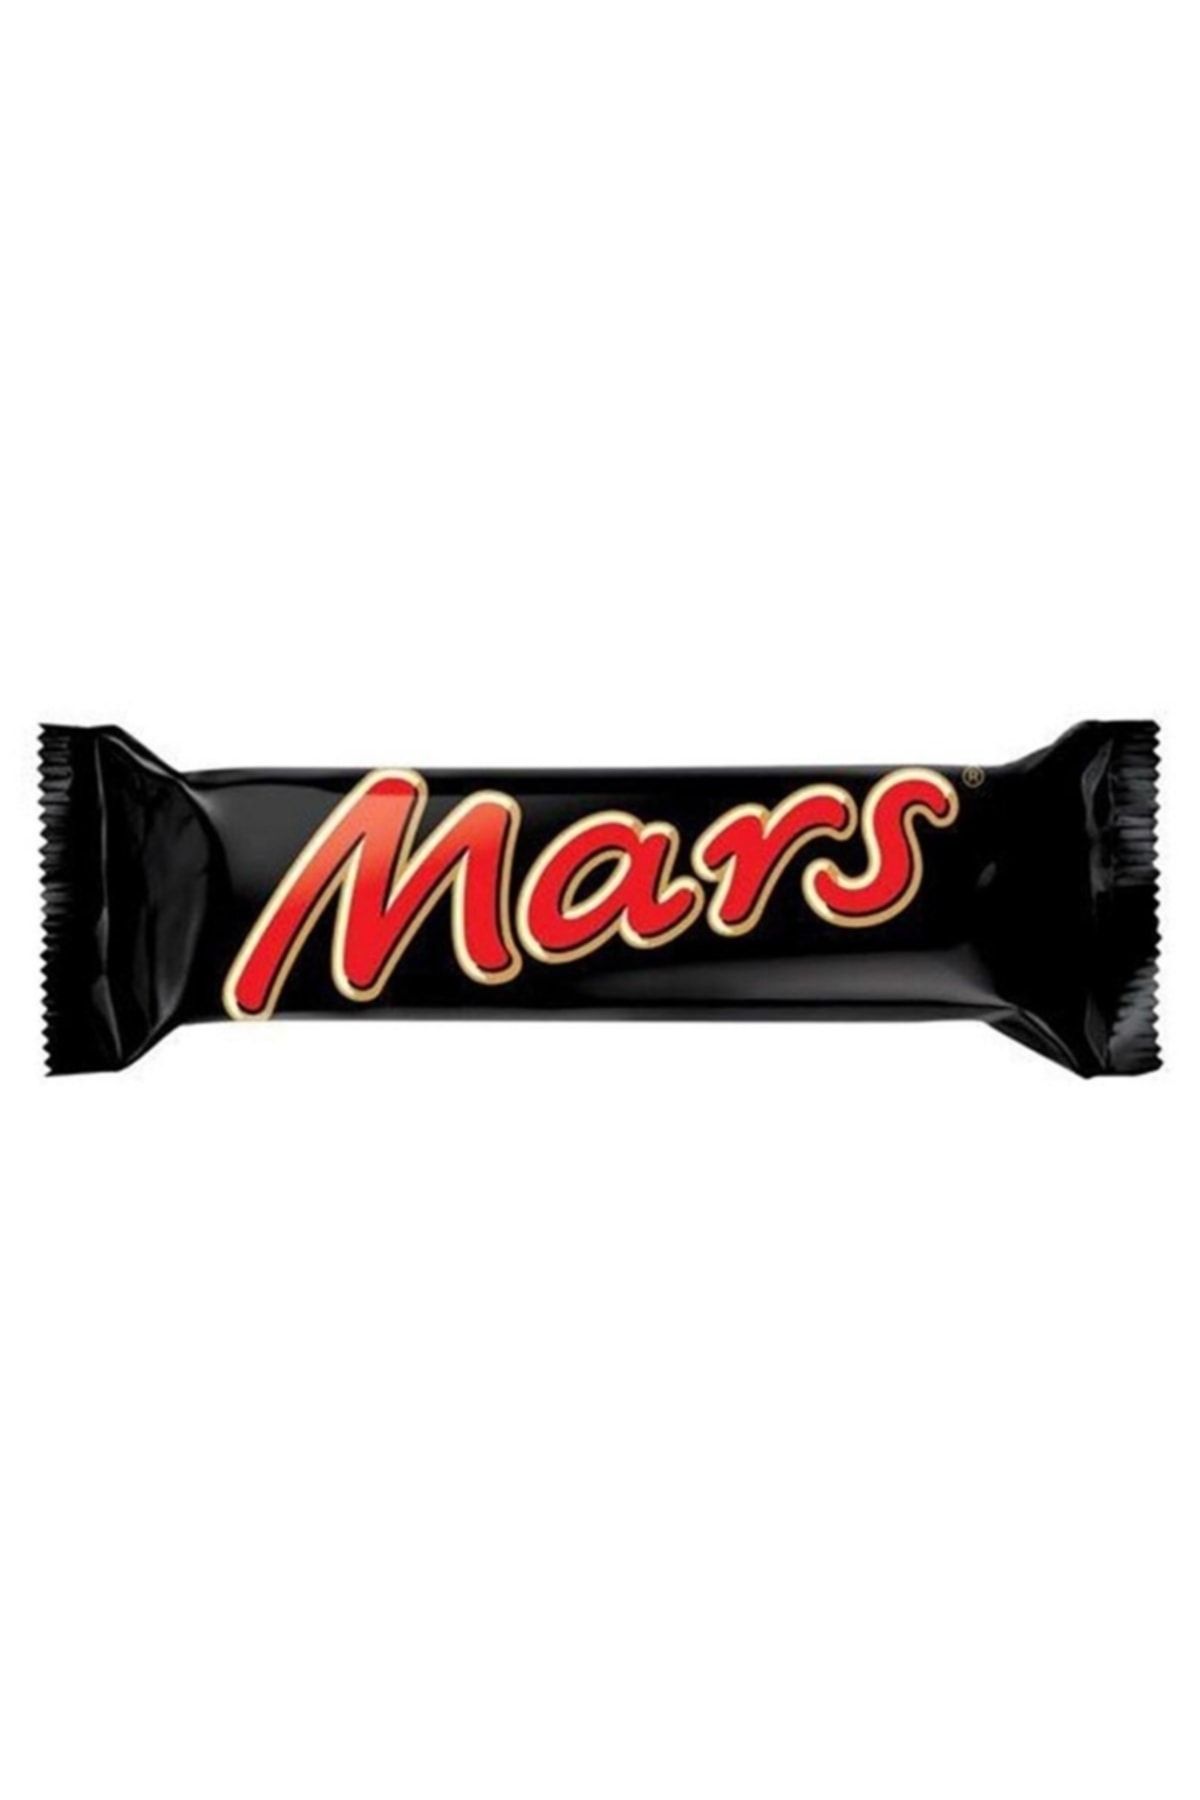 Mars Sütlü Çikolata Kaplı Karamel Ve Nugalı Bar 51 gr